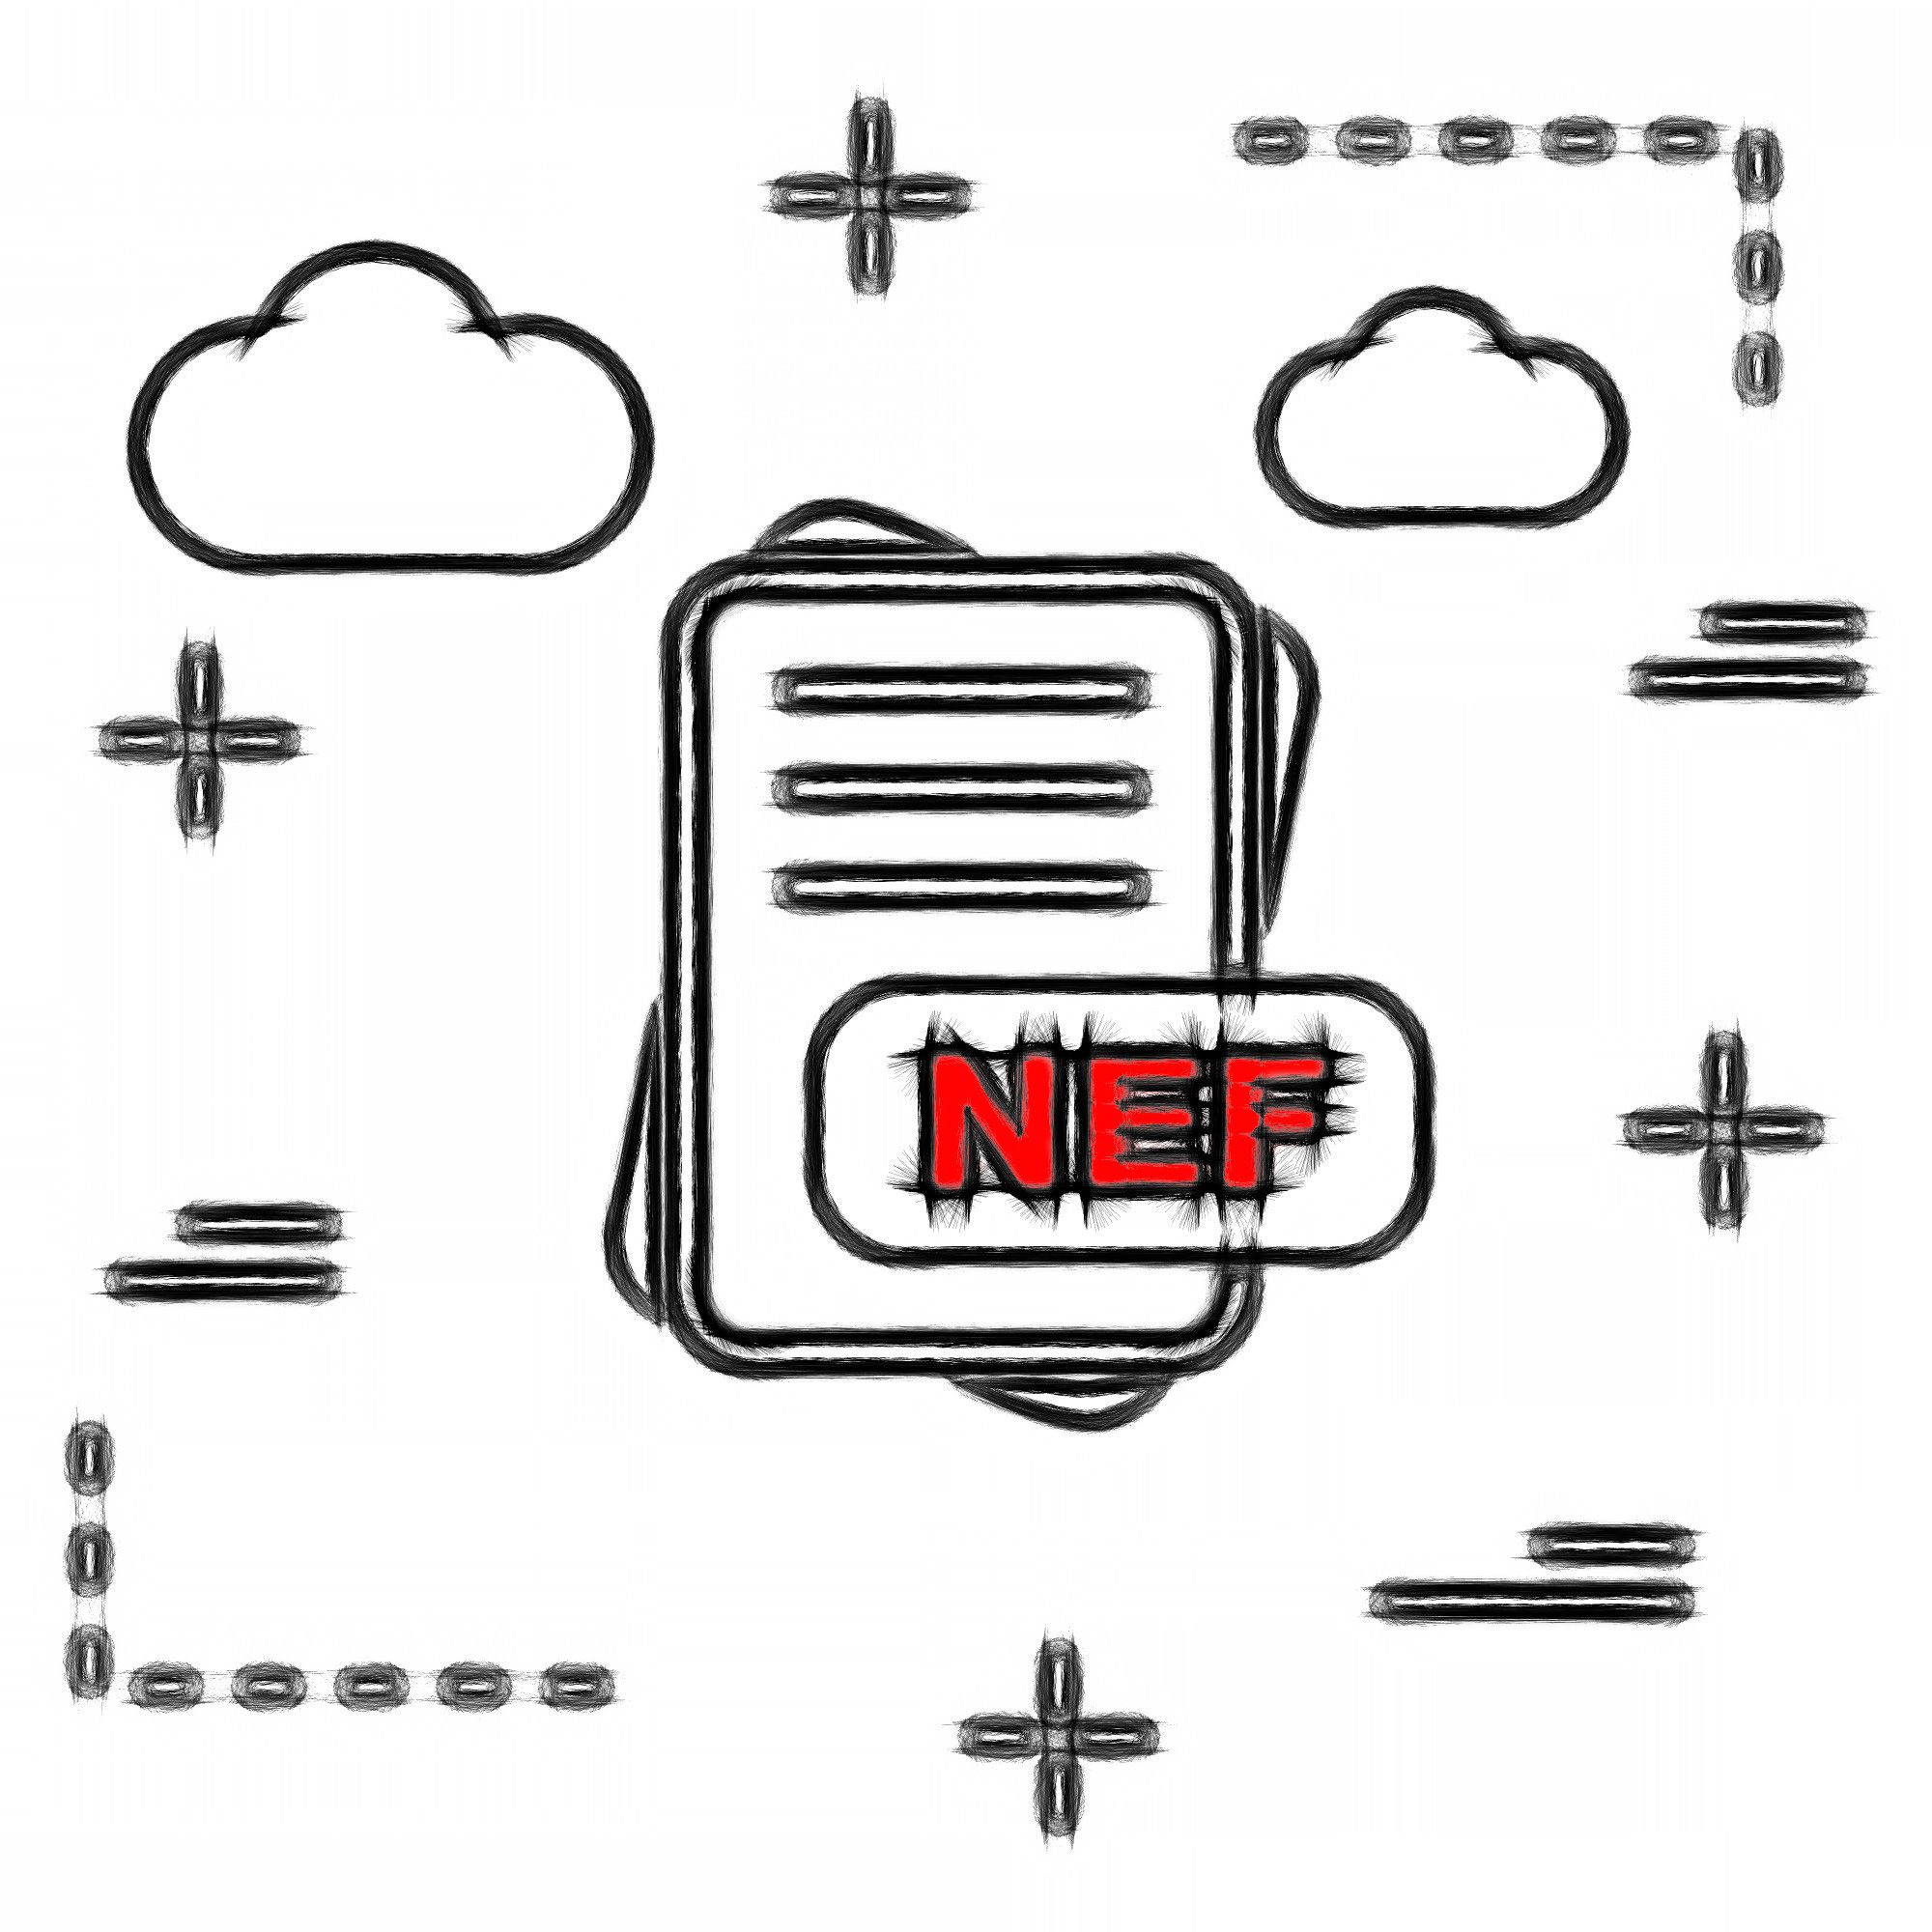 NEF file format..